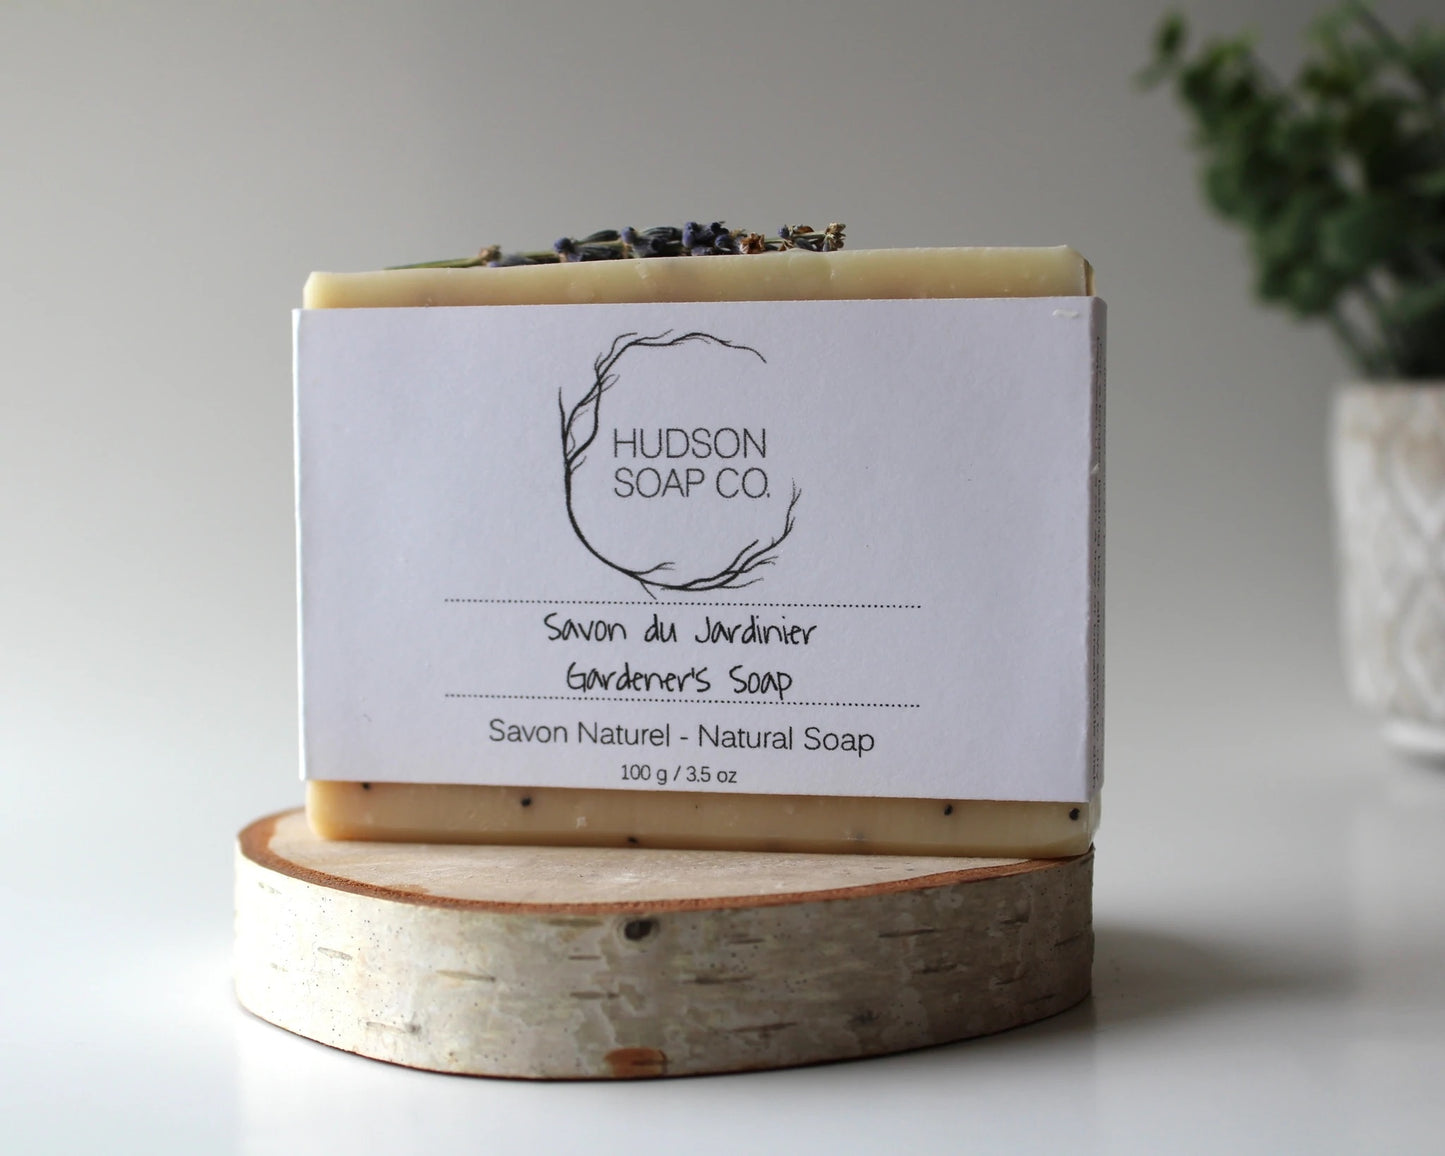 Handmade natural exfoliant soap bar in Hudson Soap Co. white packaging